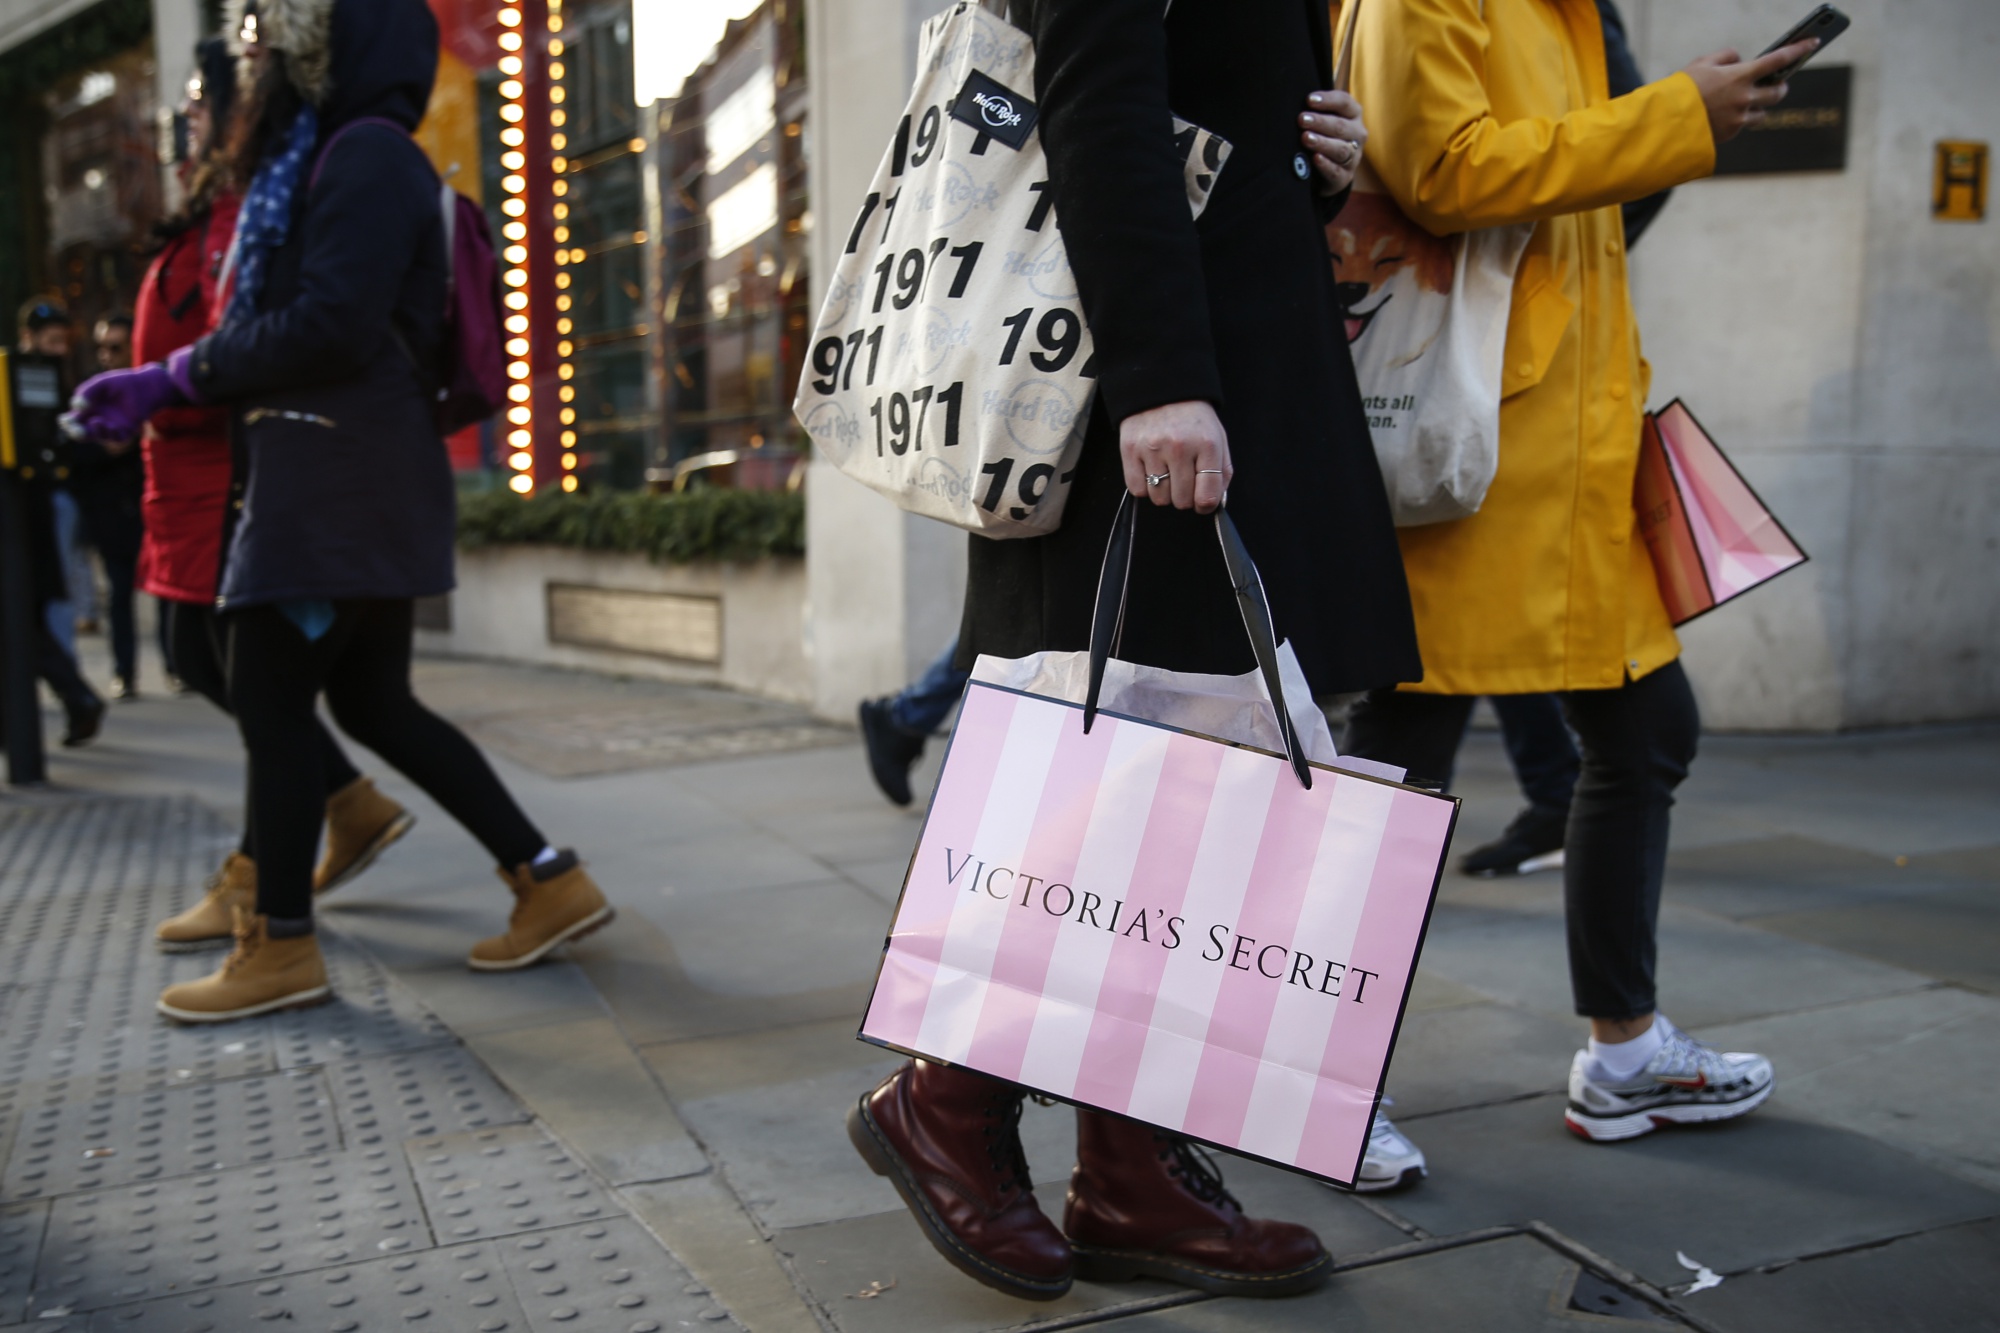 Victoria's Secret (VSCO) Stock Falls as Earnings Show Sales Fall